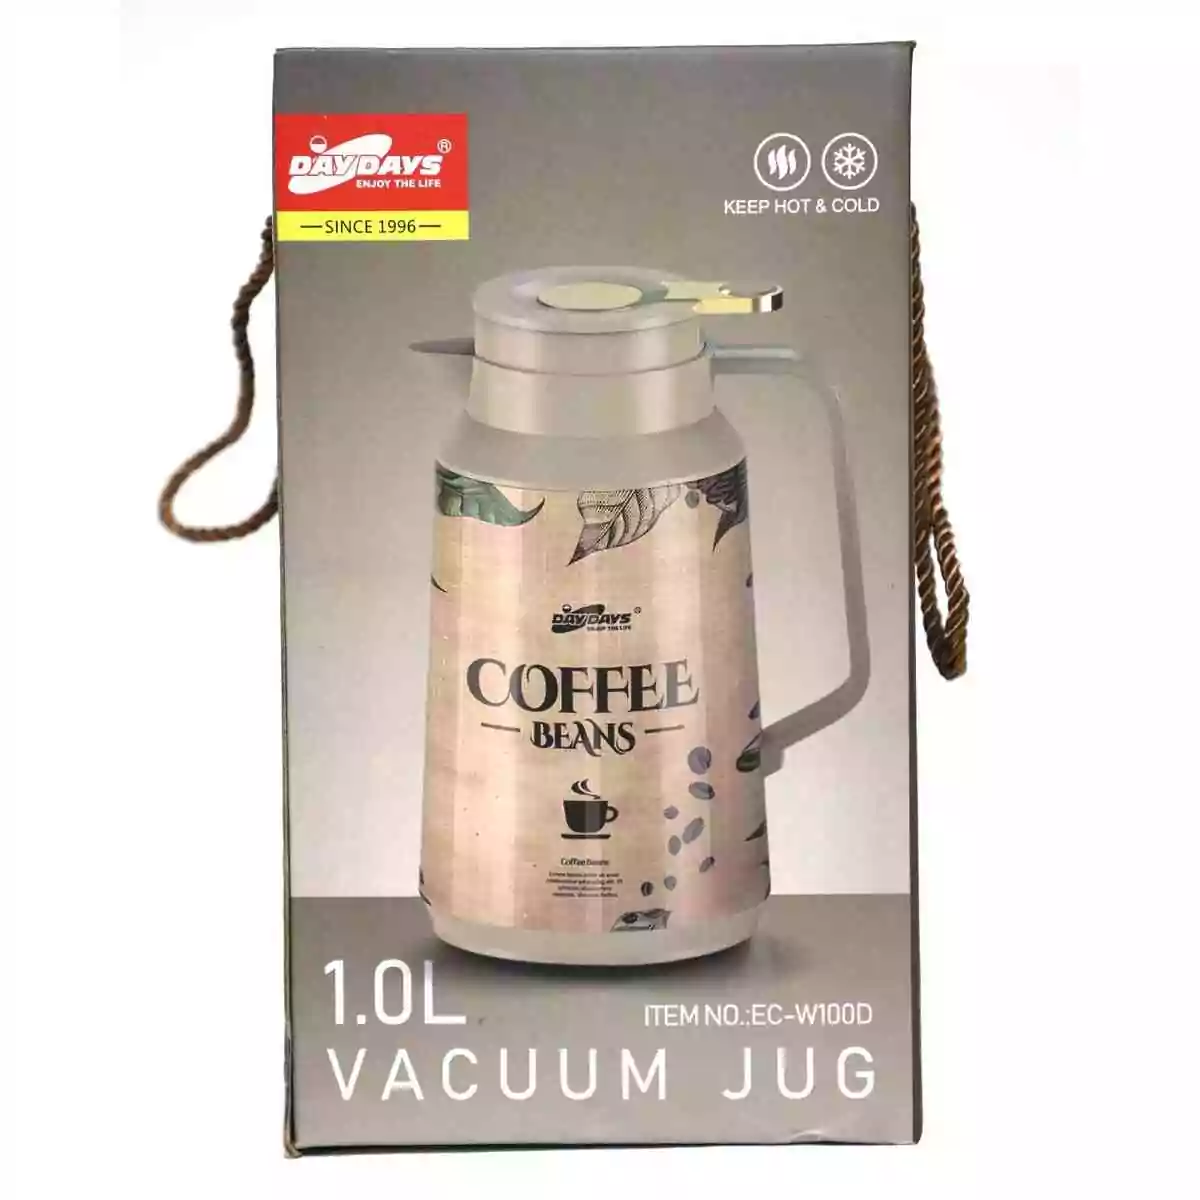 HOT & COLD Vacuum Flask Jug 1L Sri Lanka | ido.lk